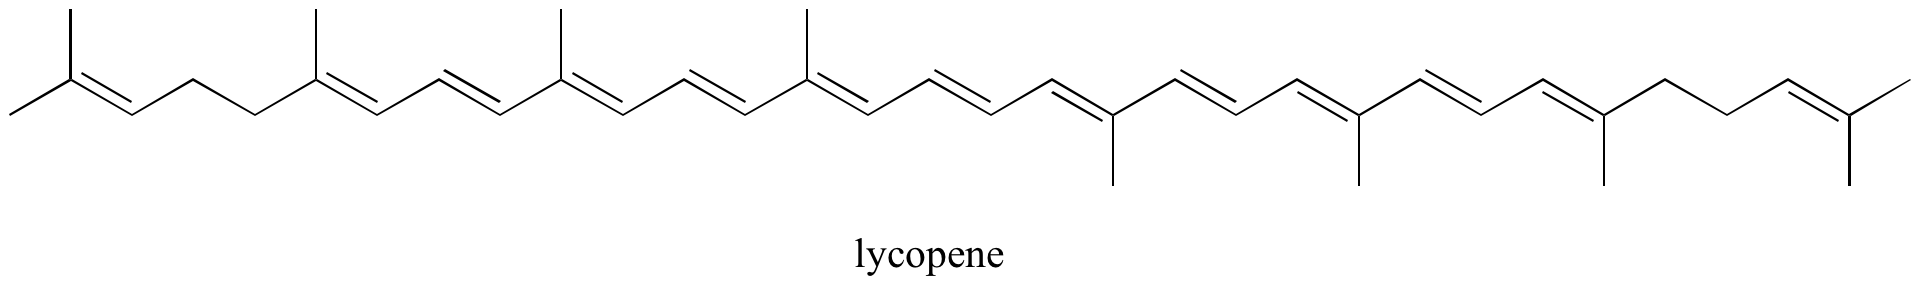 Bond line drawing of lycopene